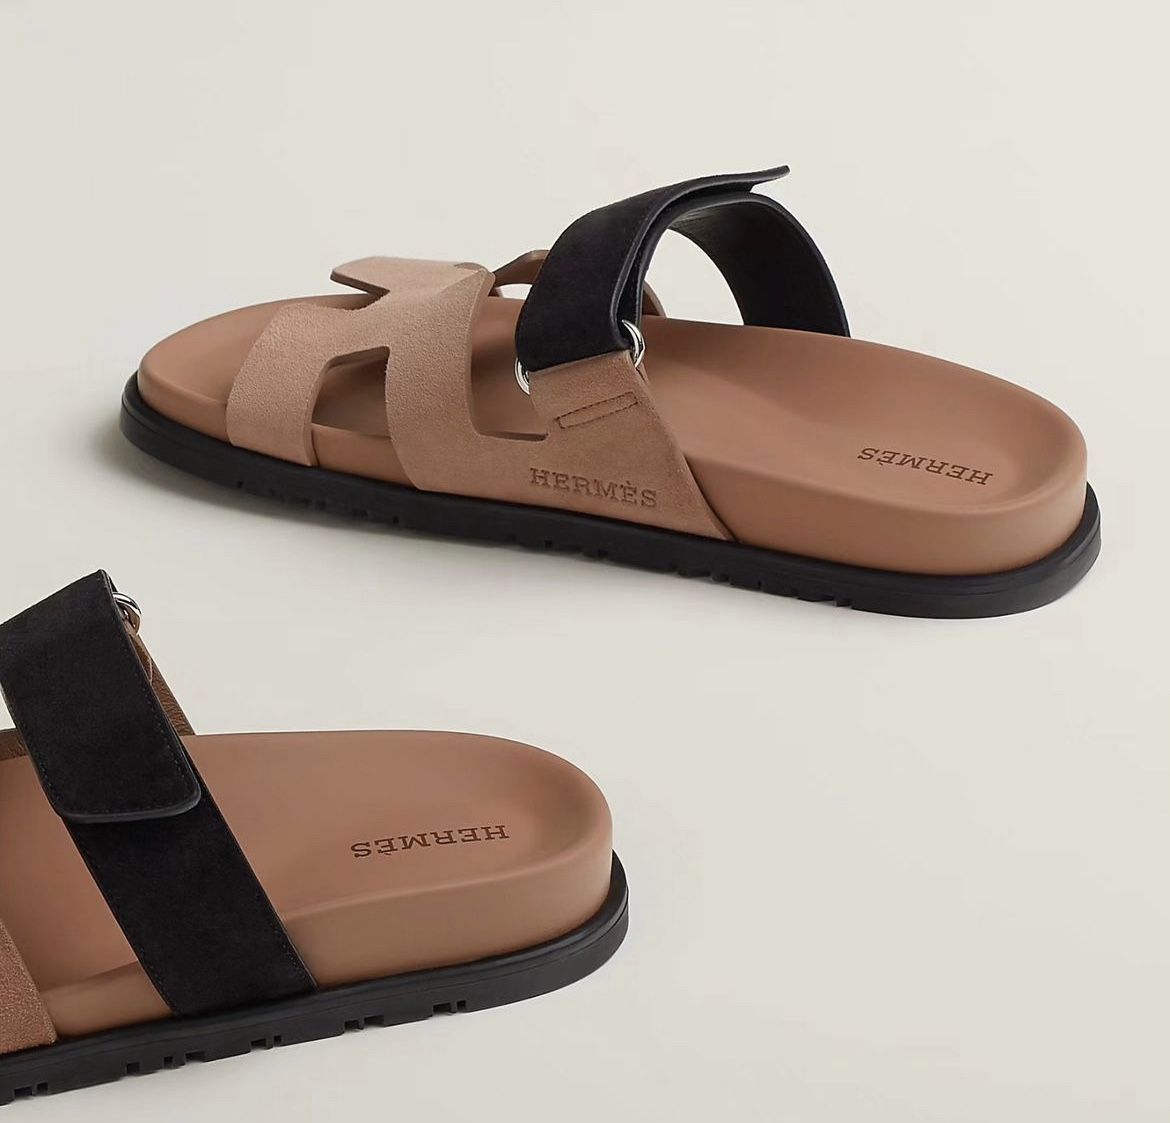 Hermes Sandals Size 40 for Sale in Fort Lauderdale, FL - OfferUp